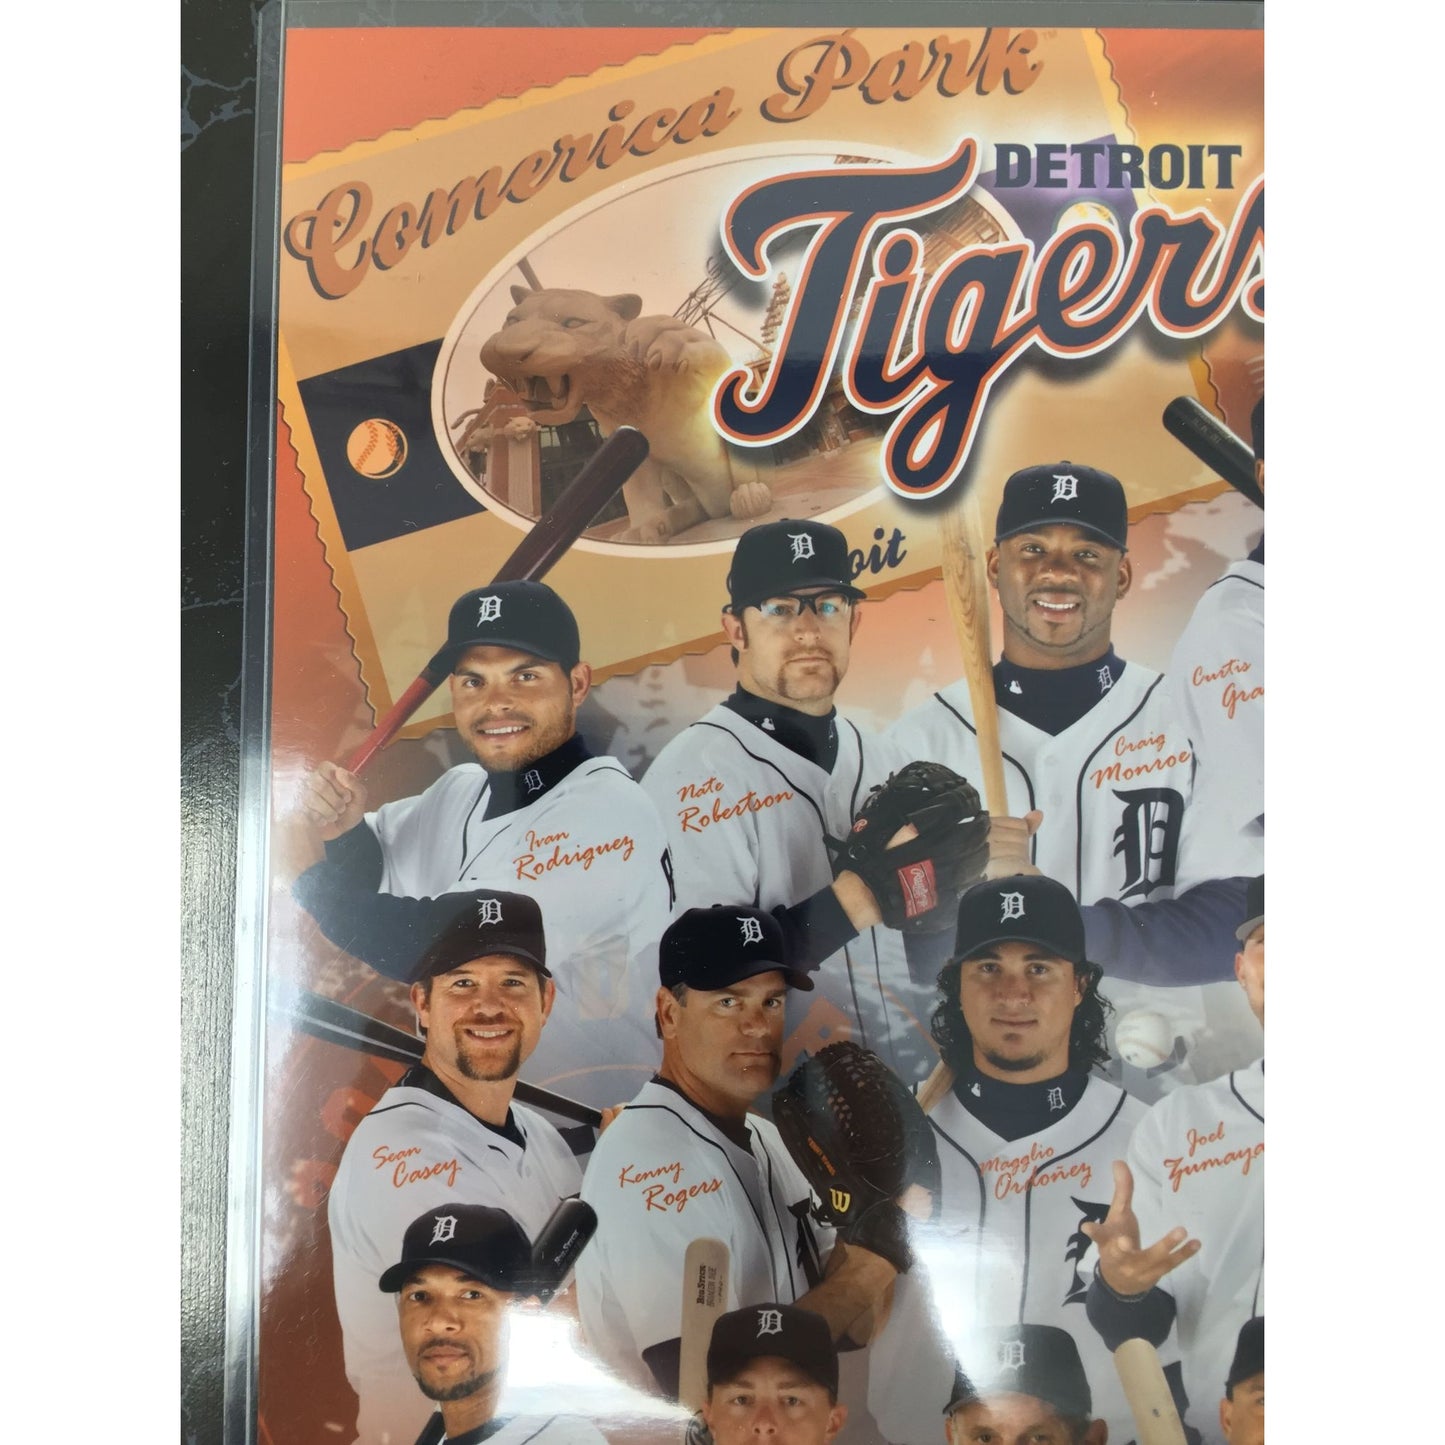 Official MLB 2007 Season Detroit Tigers Season Ticketholder Photo Plaque In Box